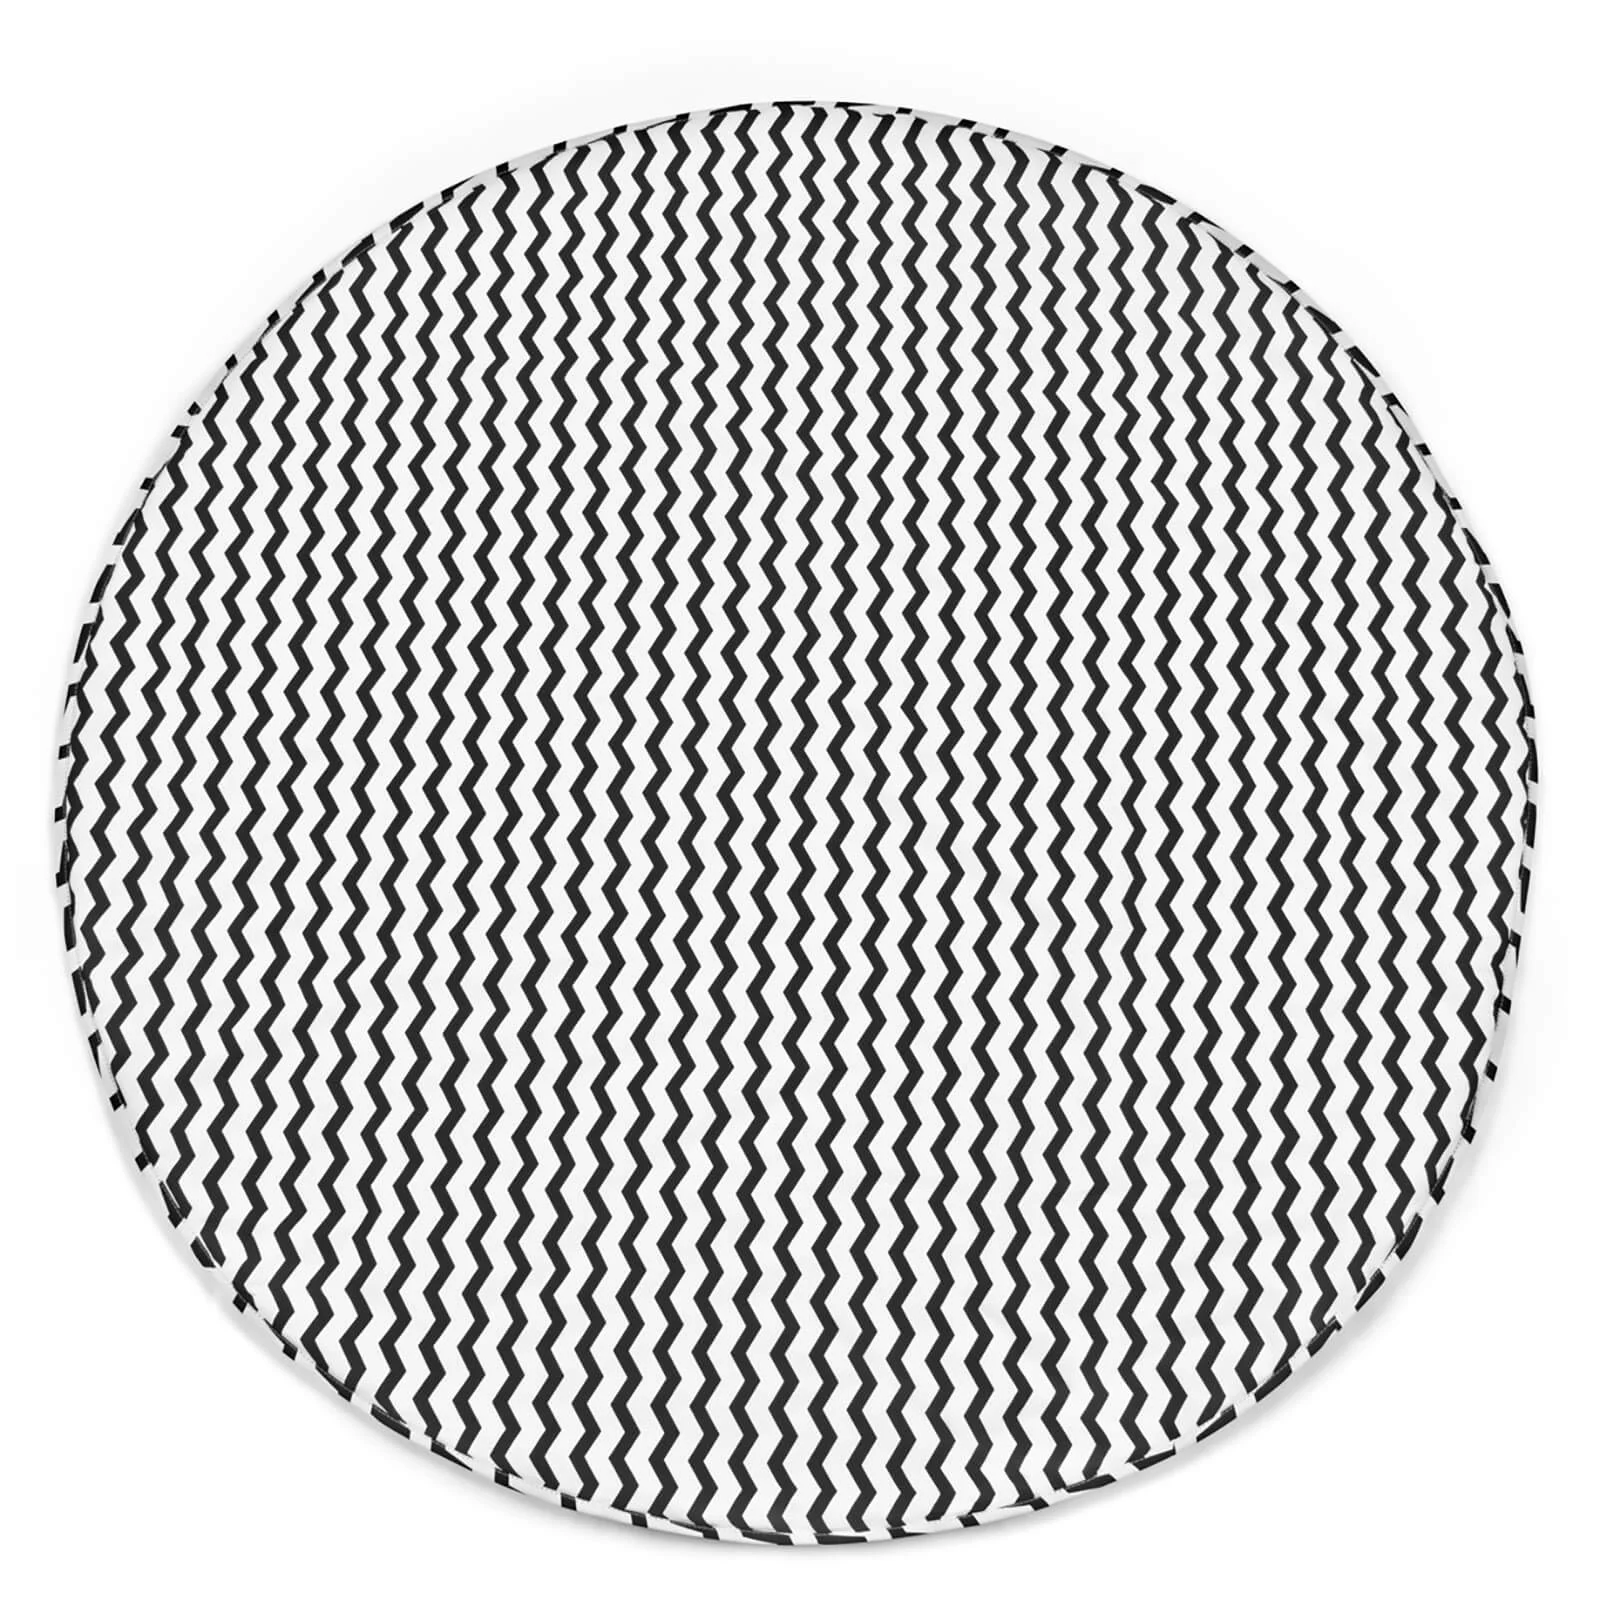 Snüz Baby Playmat - Black Chevron Striped Image 1